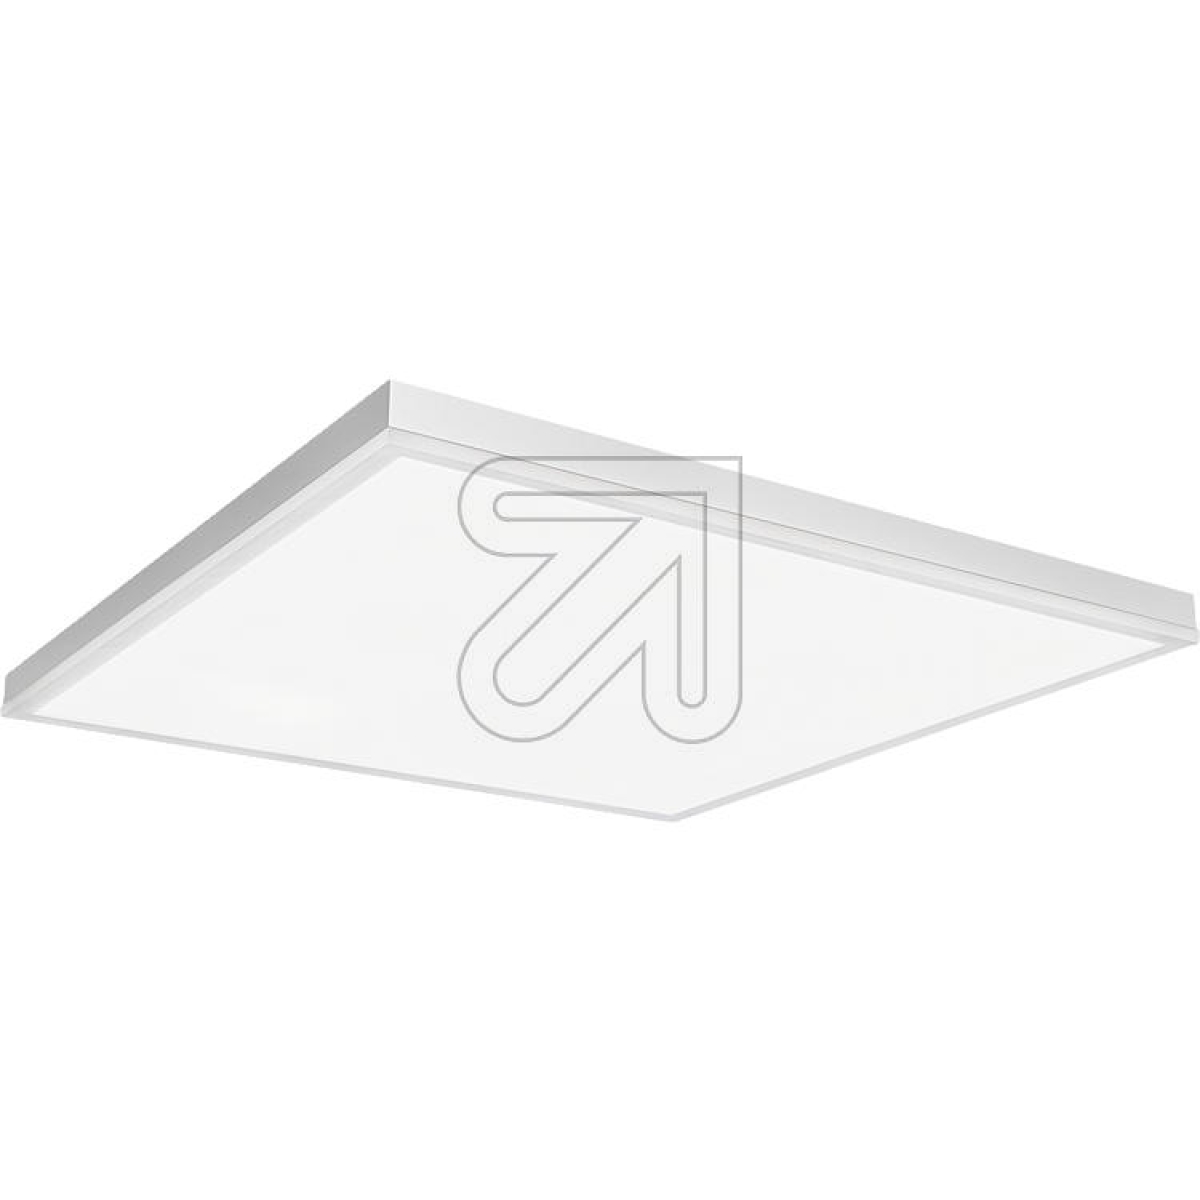 LEDVANCESmart ceiling light CCT 450x450mm white 4058075484375Article-No: 650960